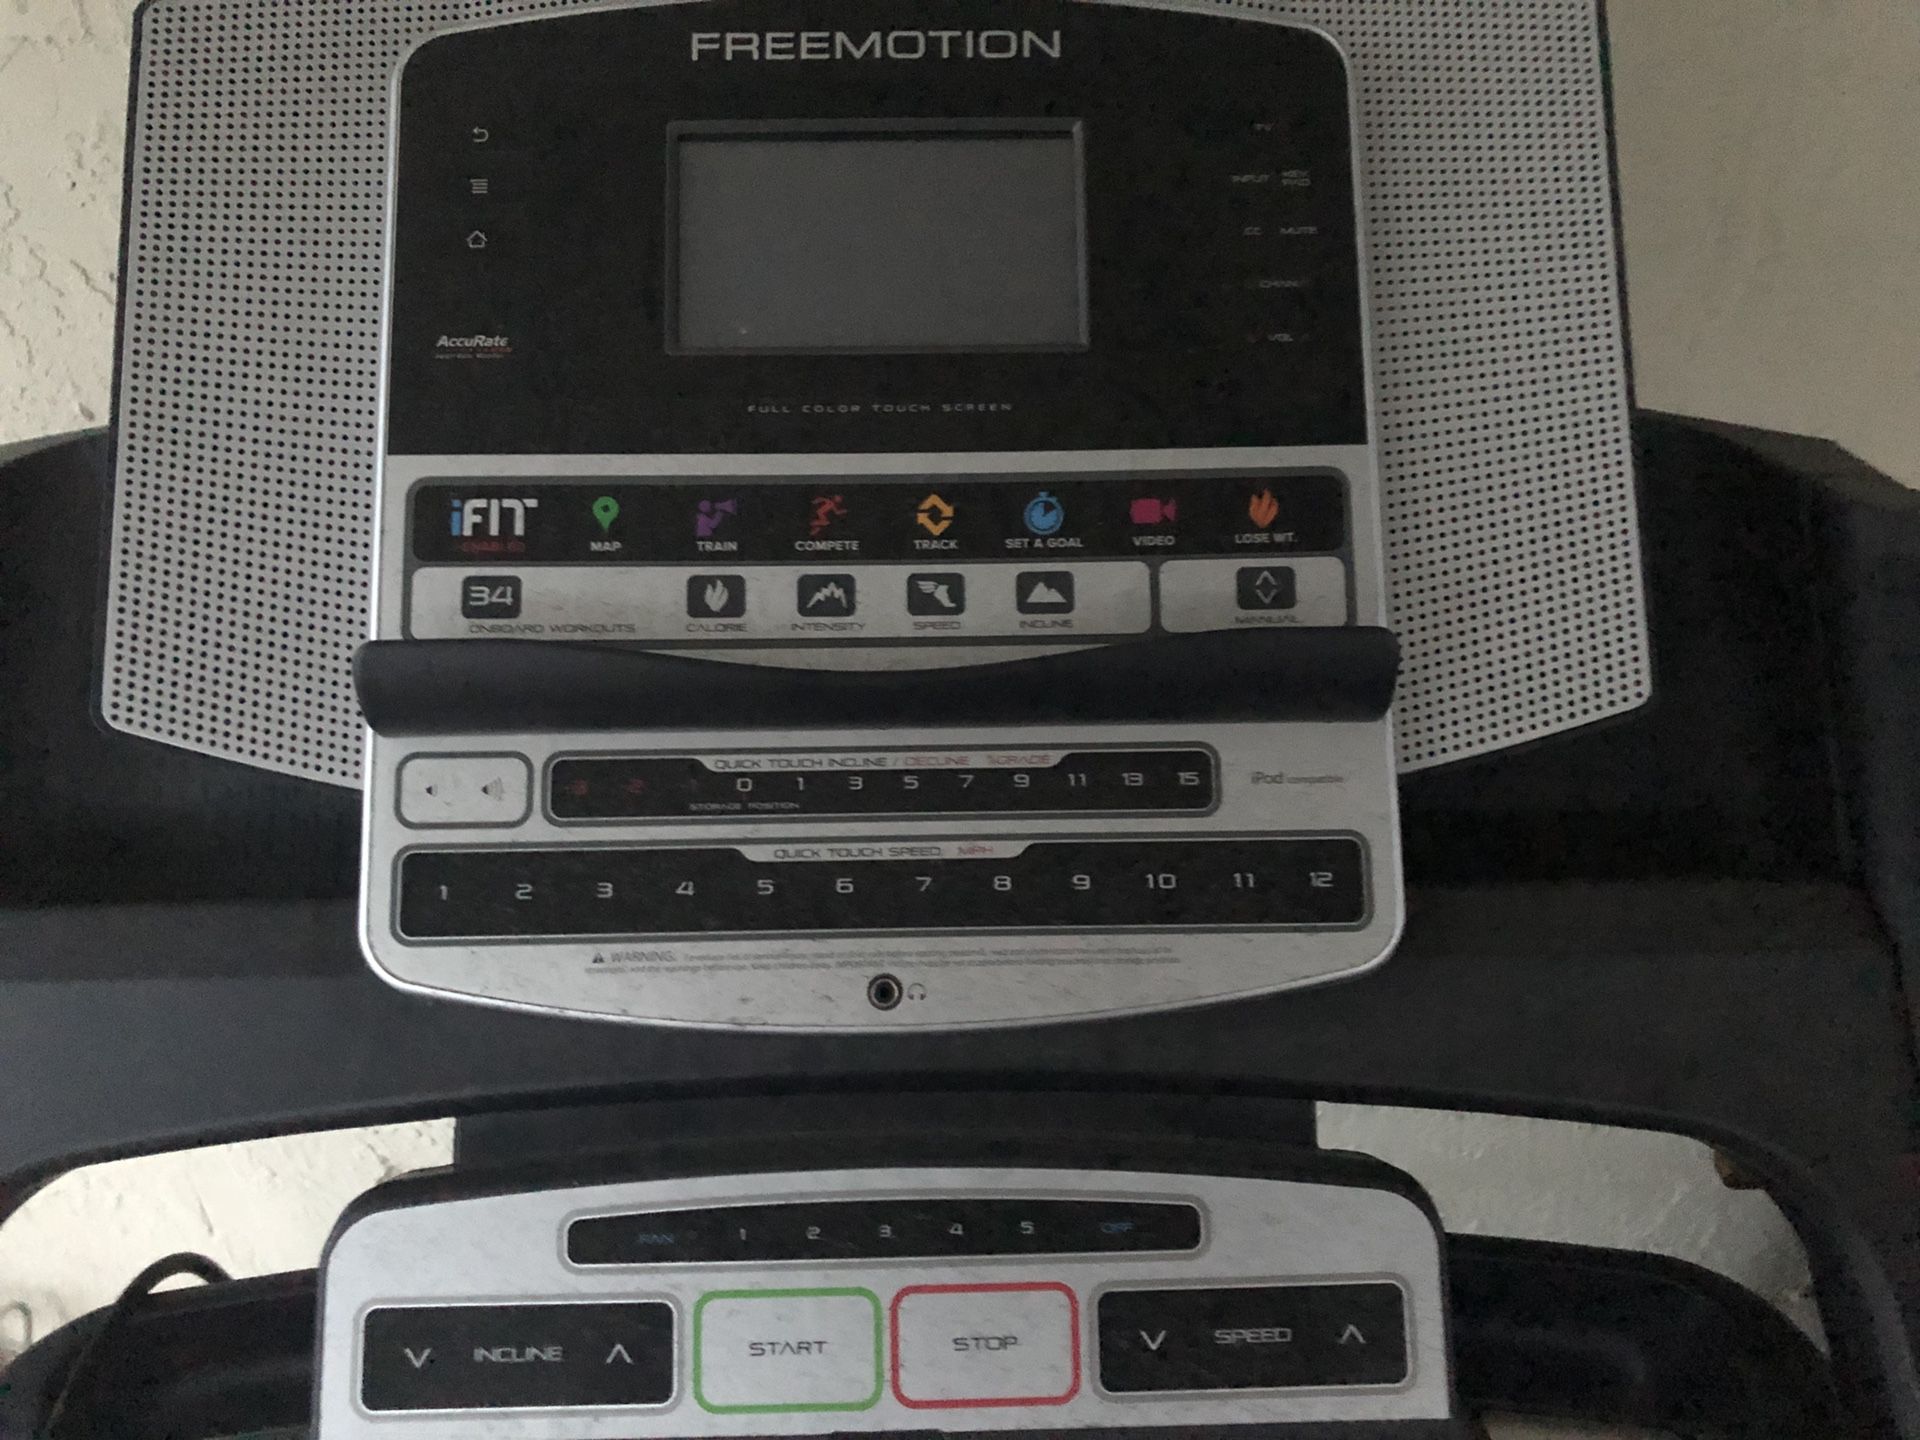 Free motion 775 treadmill